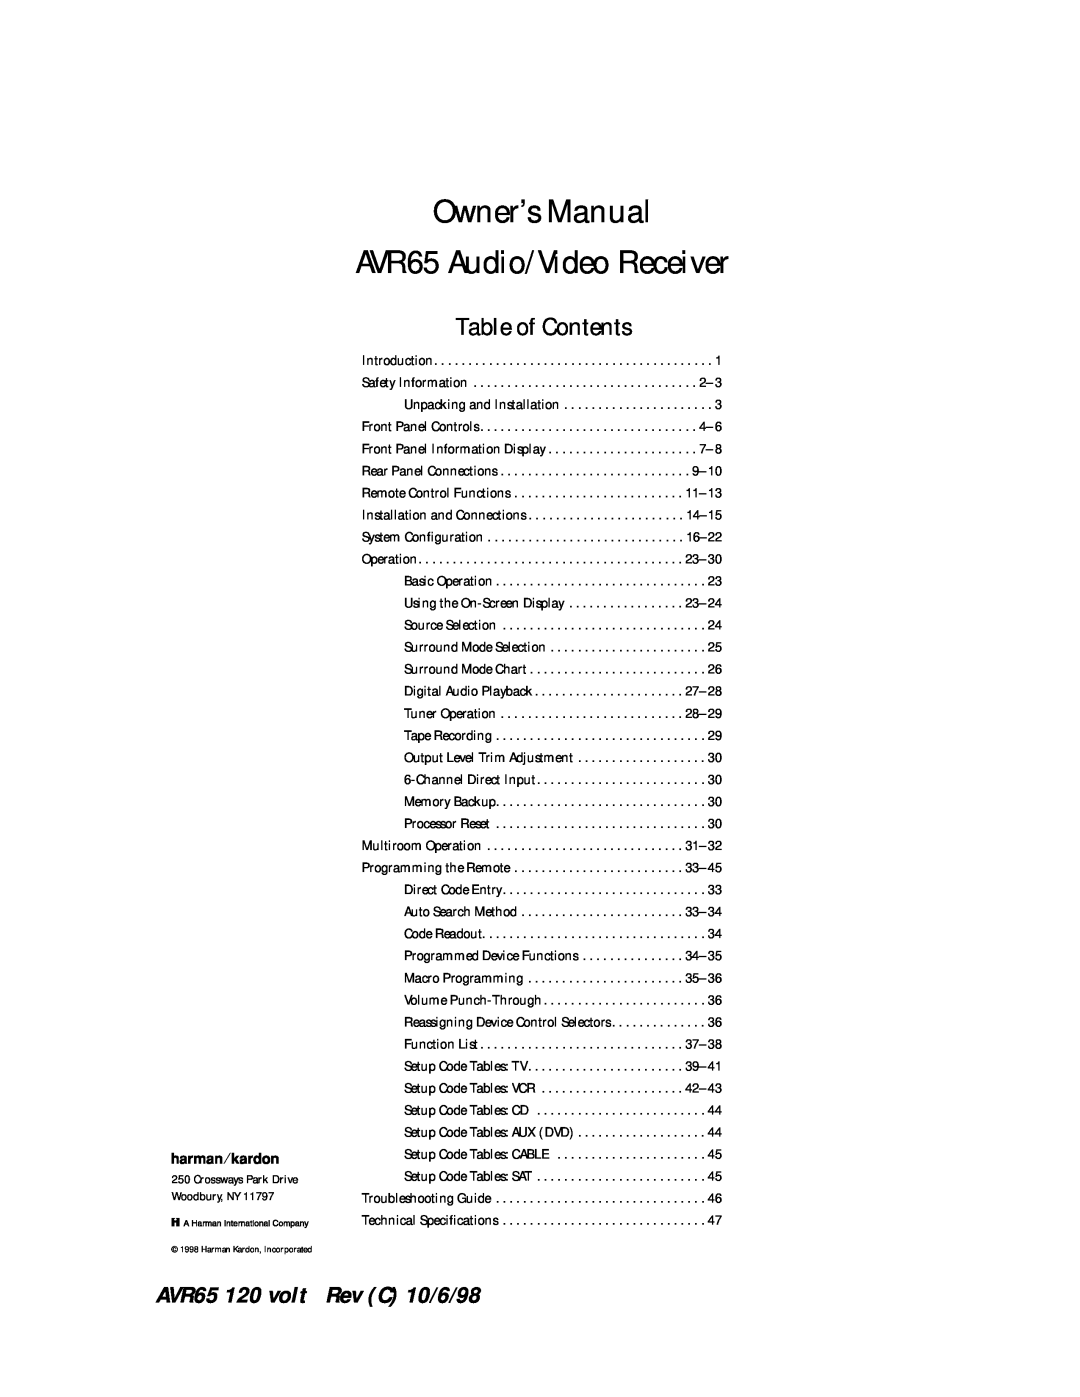 Harman-Kardon manual Table of Contents, AVR65 120 volt Rev C 10/6/98 